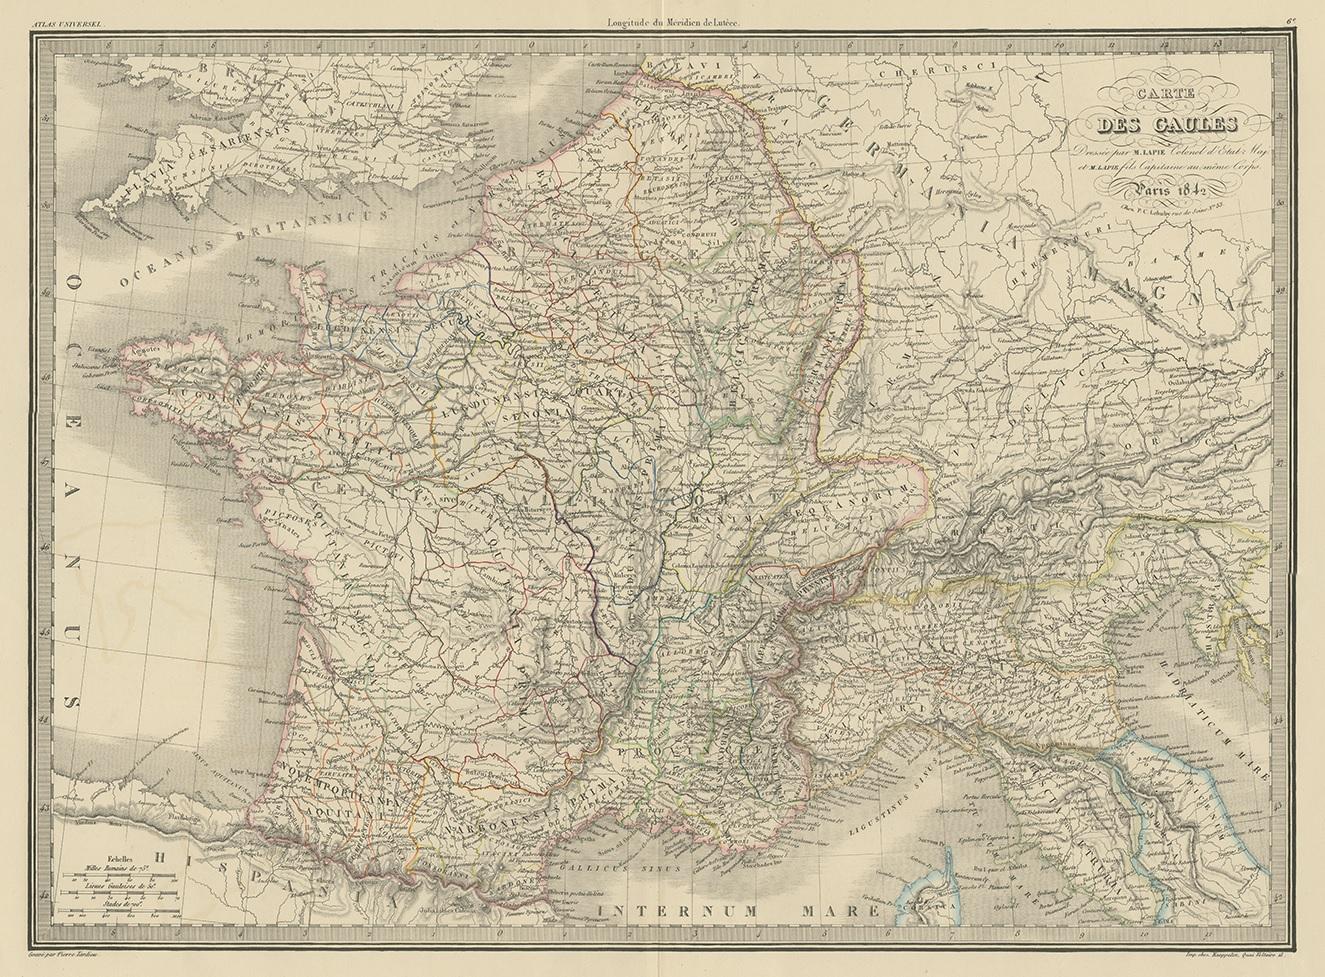 Antique map titled 'Carte des Gaules'. Map of France. This map originates from 'Atlas universel de géographie ancienne et moderne (..)' by Pierre M. Lapie and Alexandre E. Lapie. Pierre M. Lapie was a French cartographer and engraver. He was the